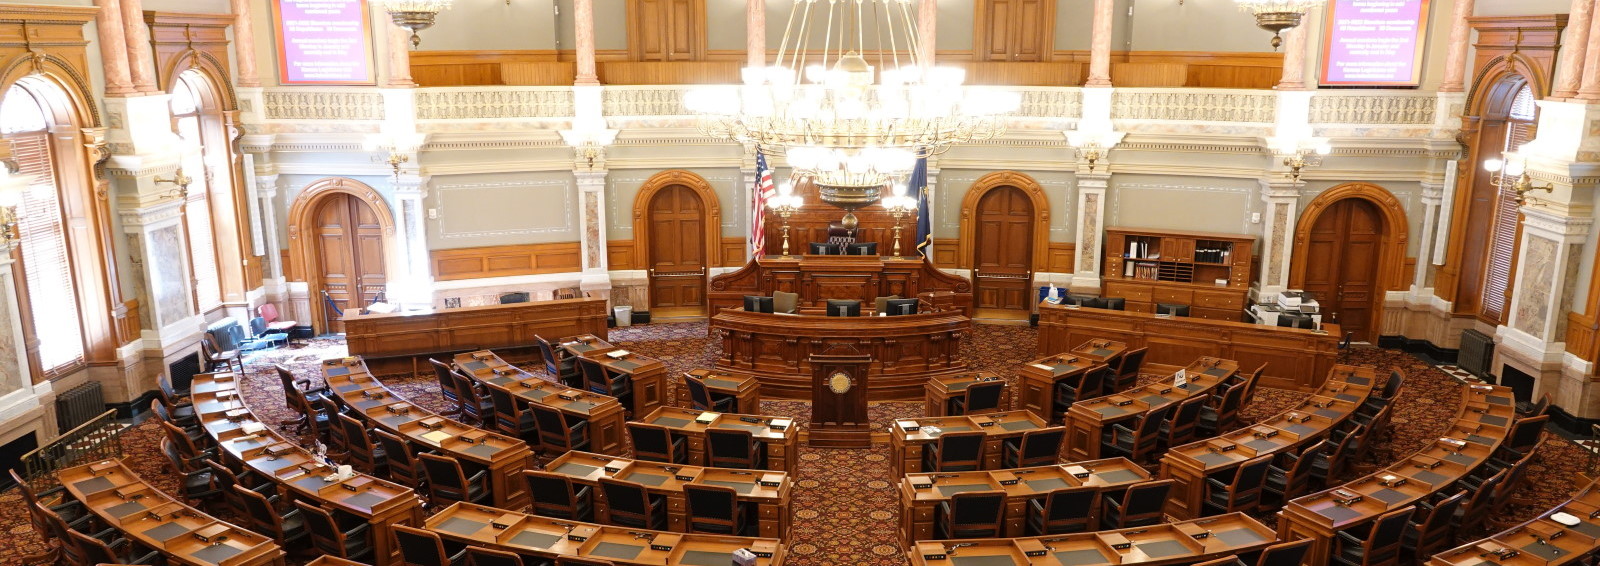 The interior of the Kansas House of Representatives